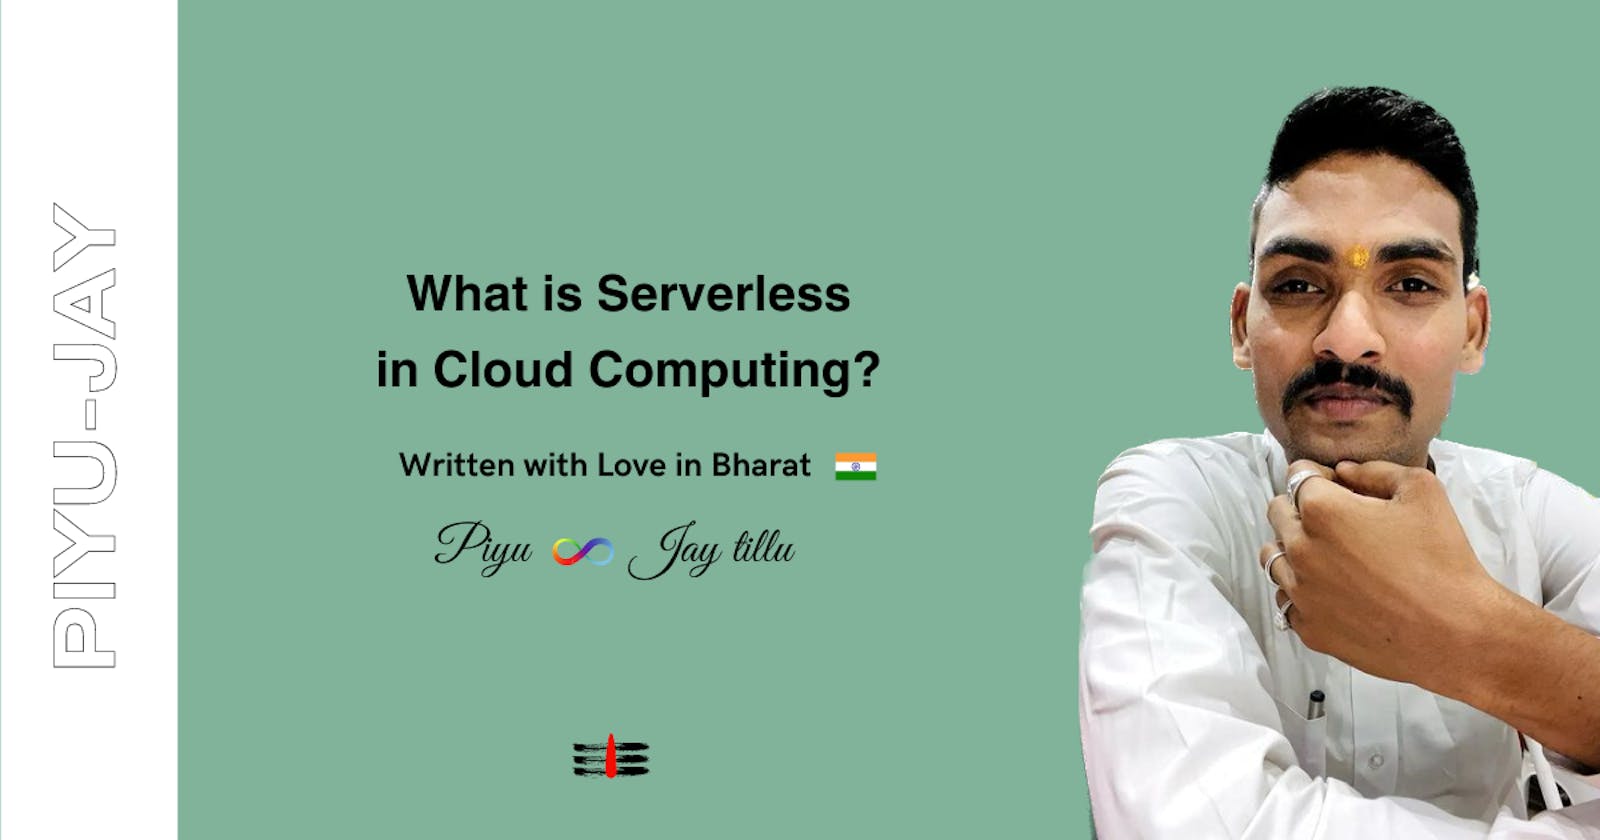 What Serverless in Cloud Computing?